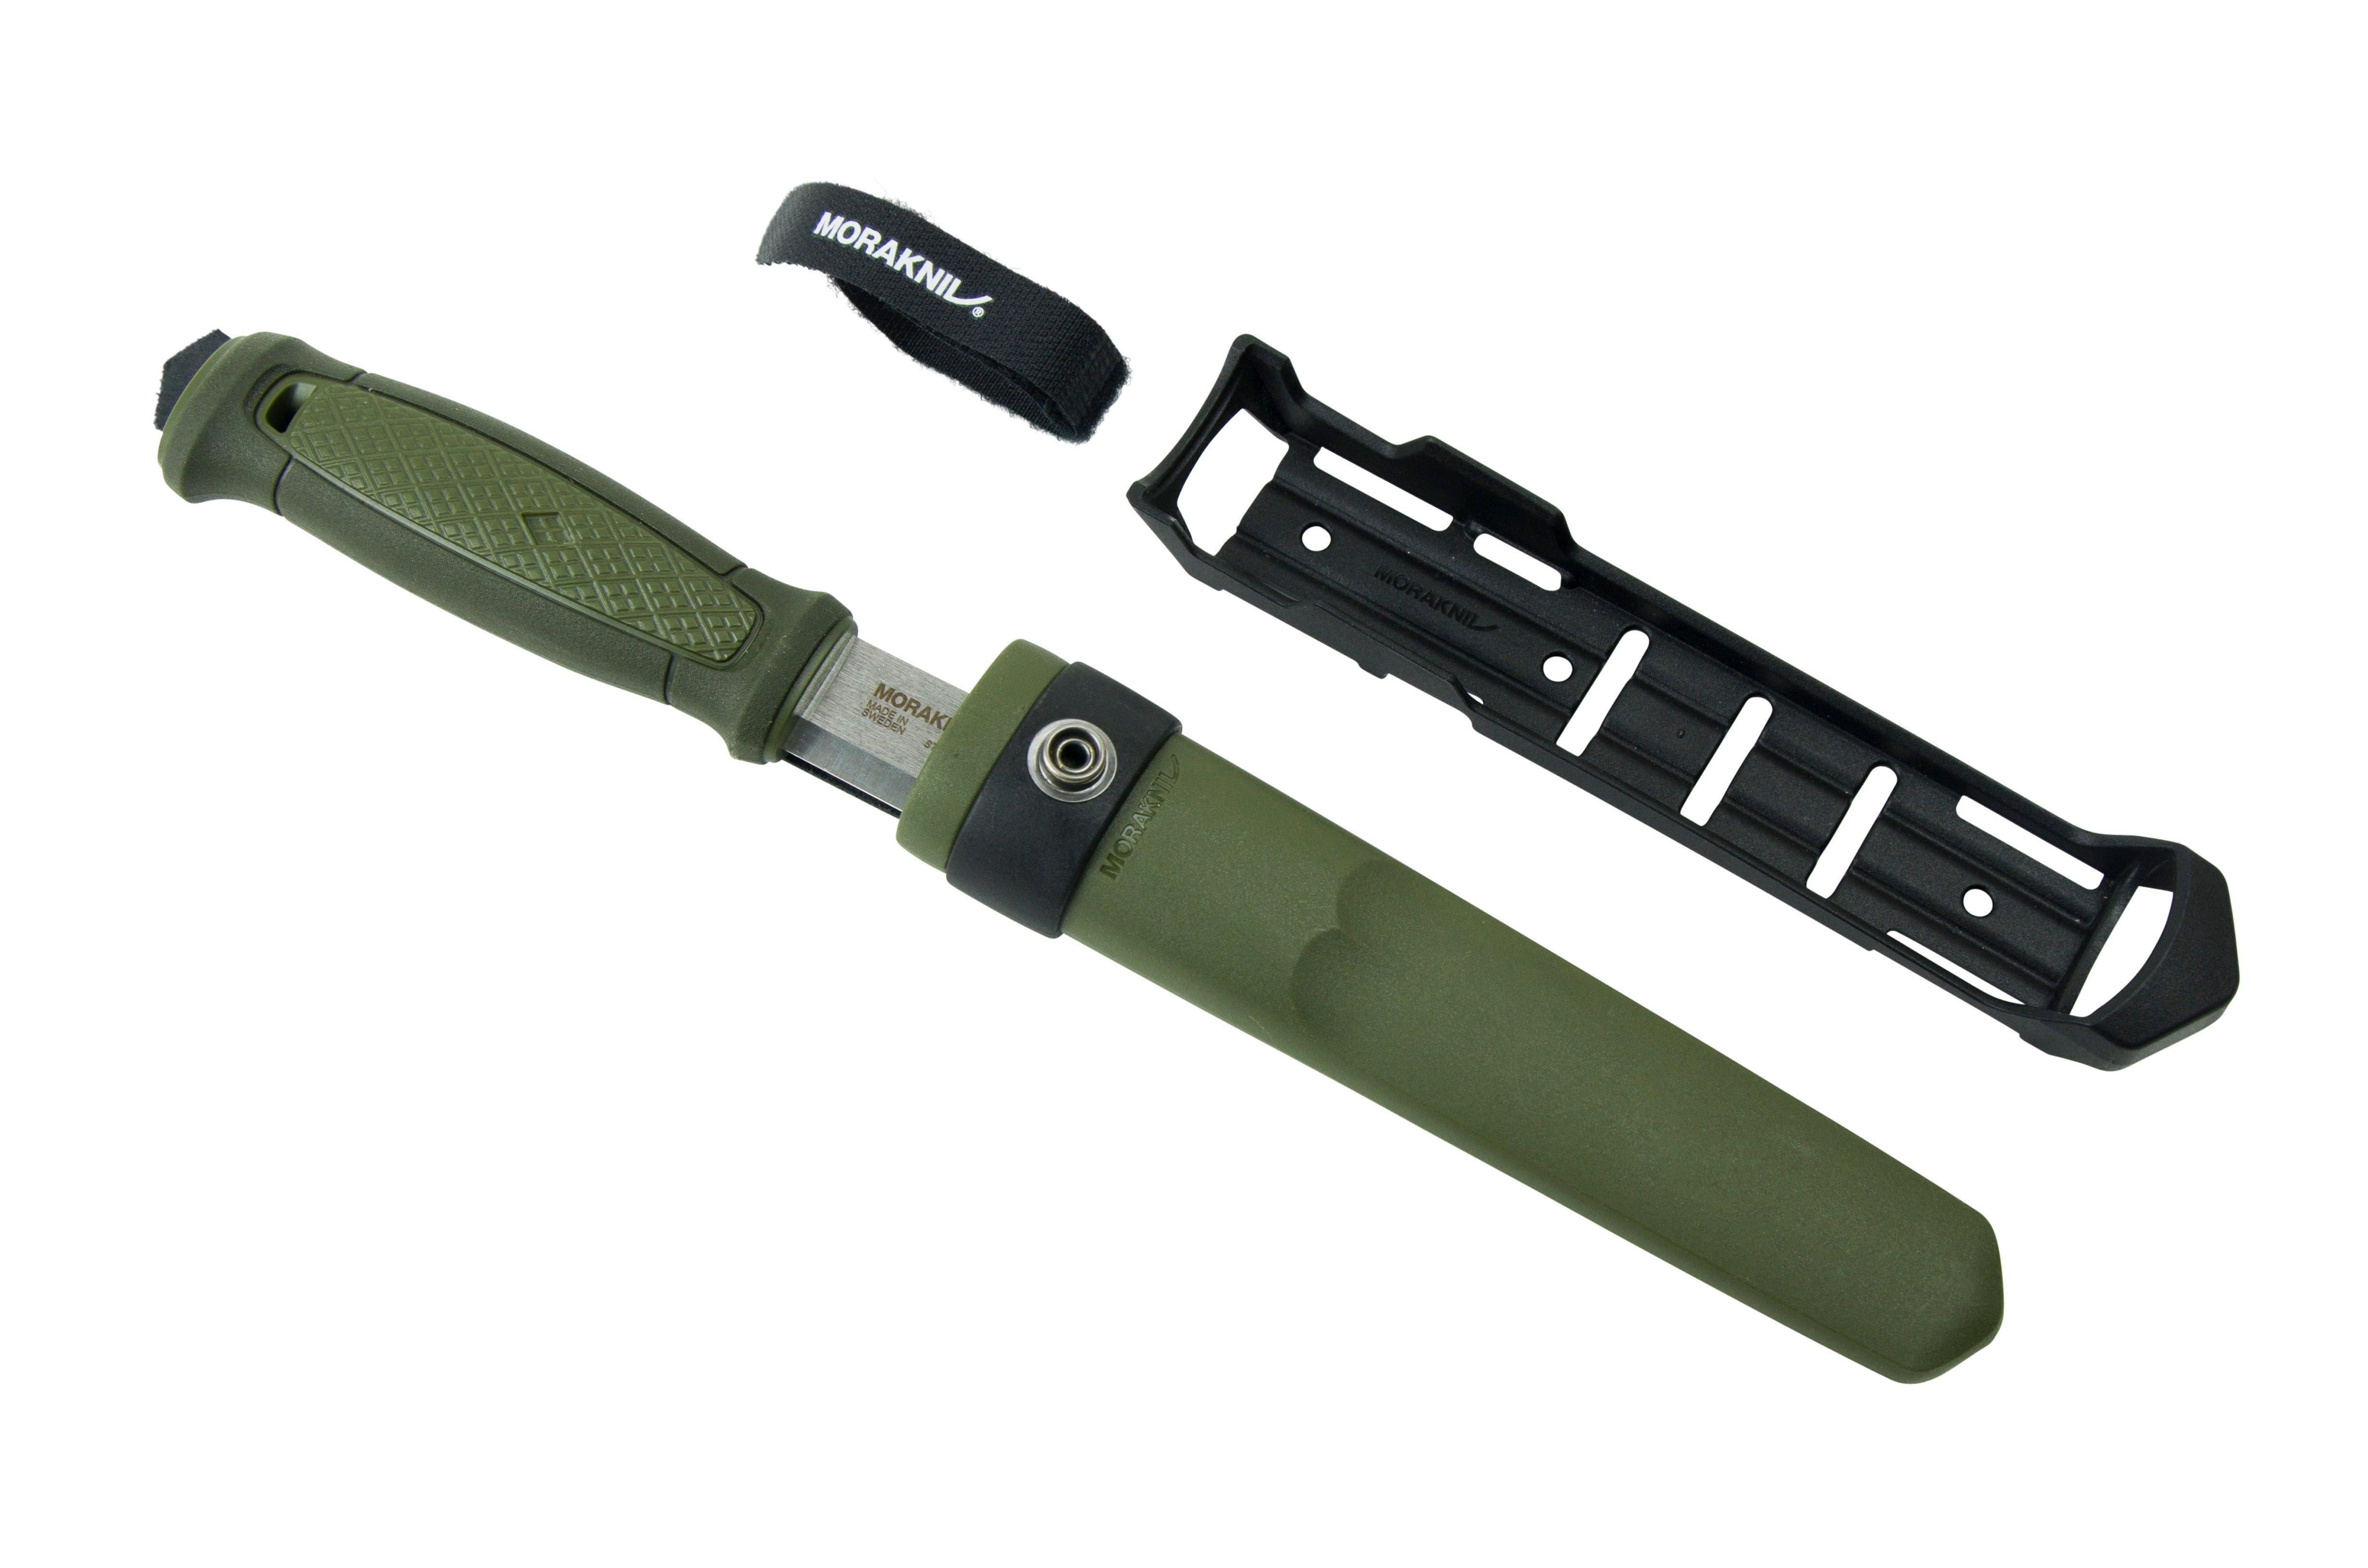 Morakniv Kansbol Utility Knife Fixed Blade Knife 4.3 12C27 with Survival  Kit, OD Green TPE Handle, Polypropylene Sheath - KnifeCenter - M-13912